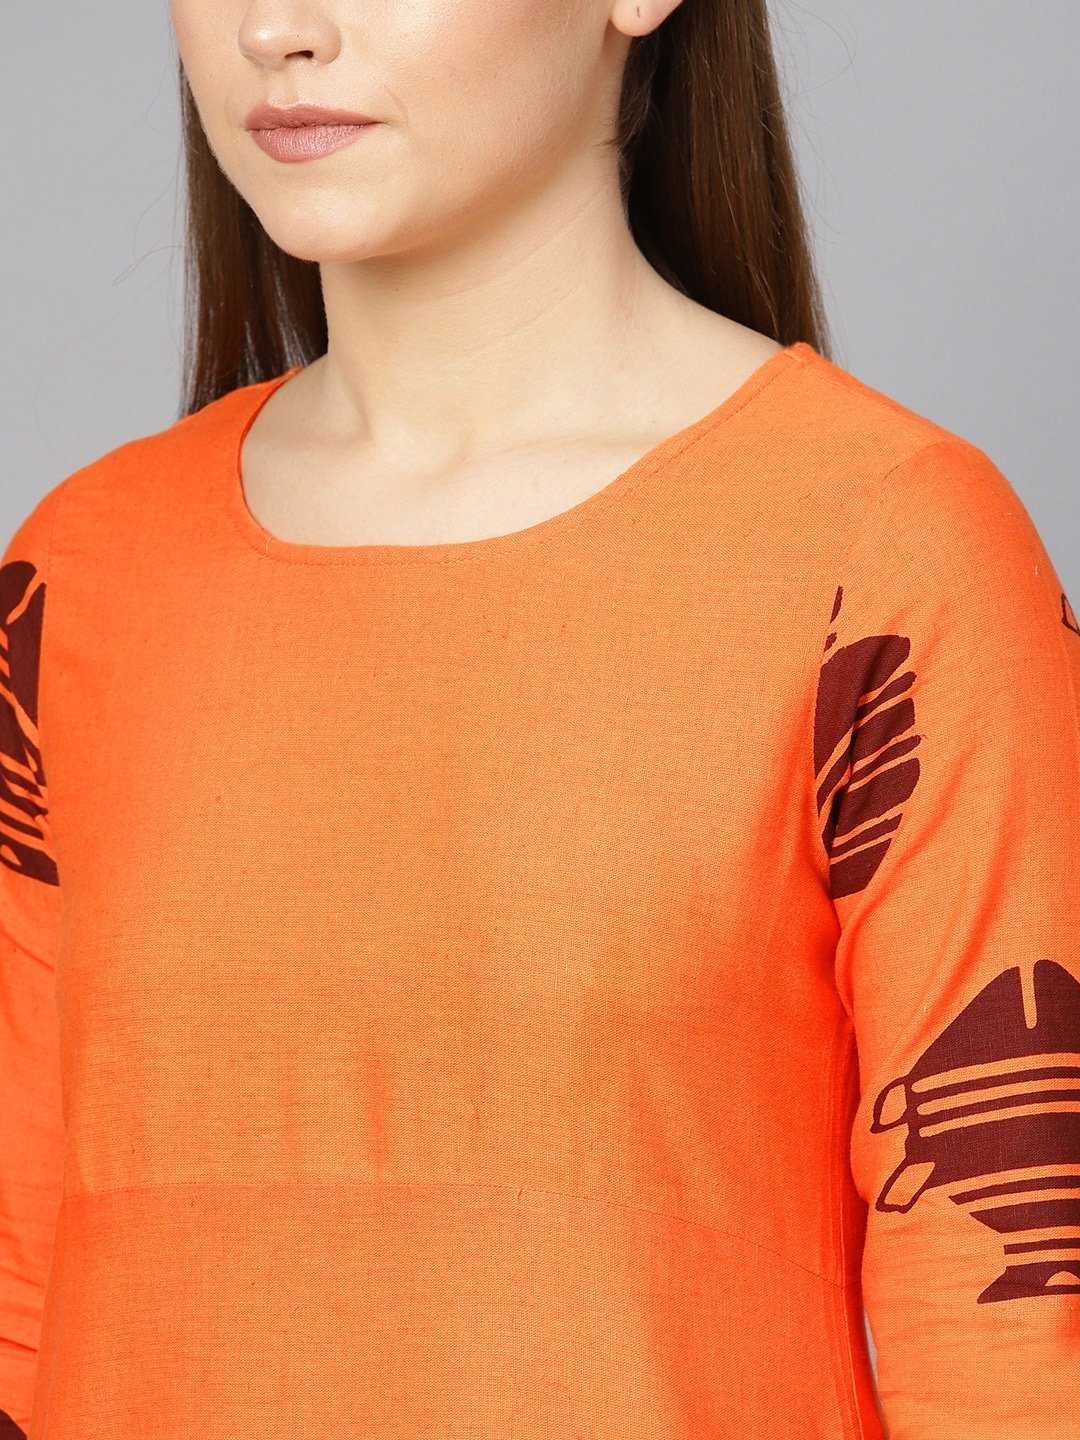 Women's  Orange & Brown Printed A-Line Kurta - AKS